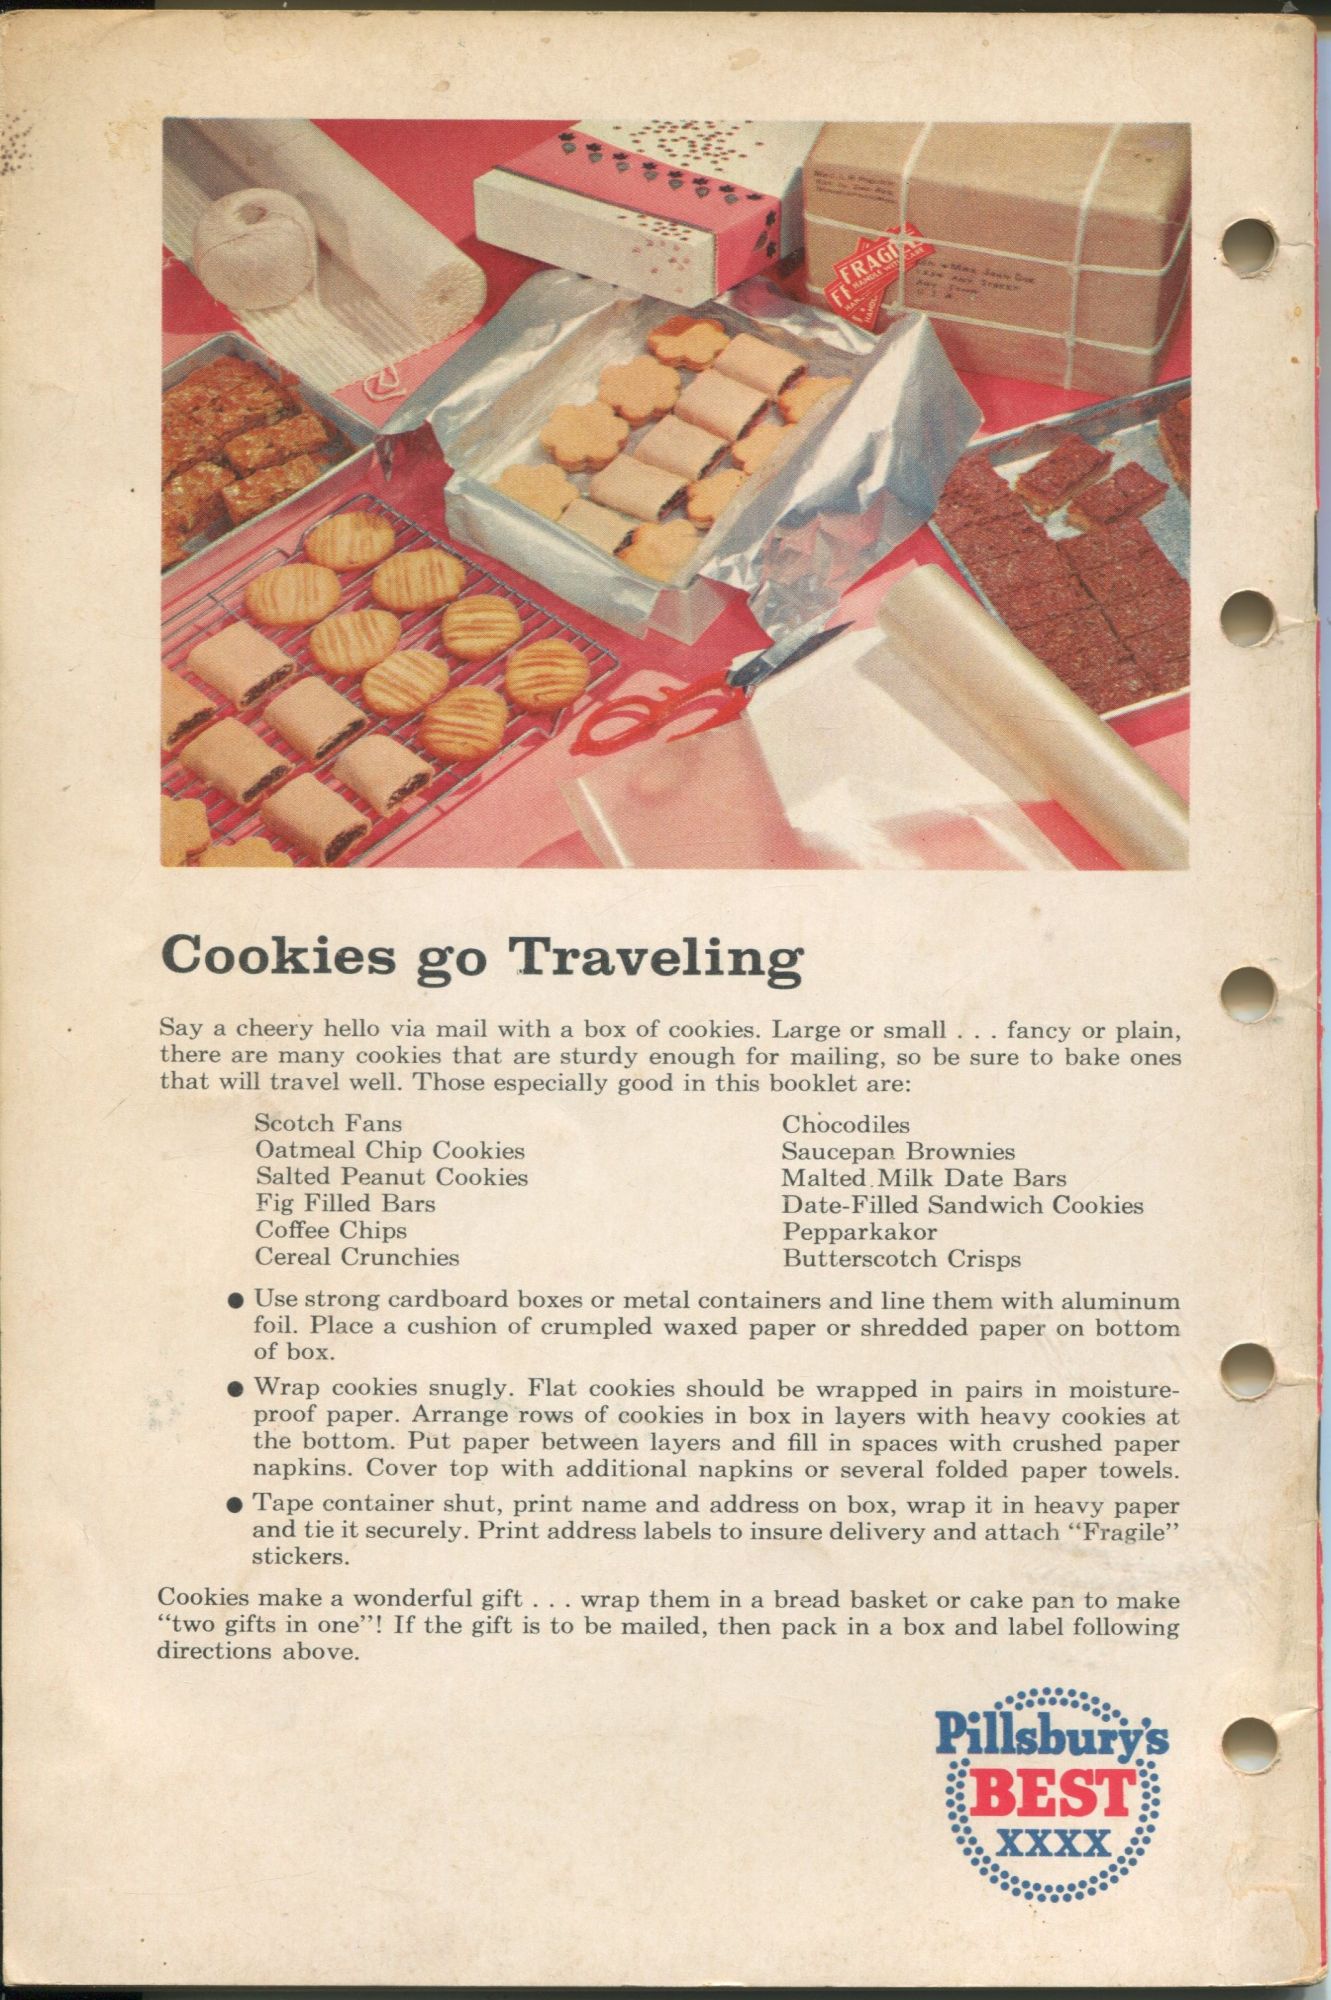 Pillsbury's Best Butter Cookie Cookbook; recipes from the Bake-Off